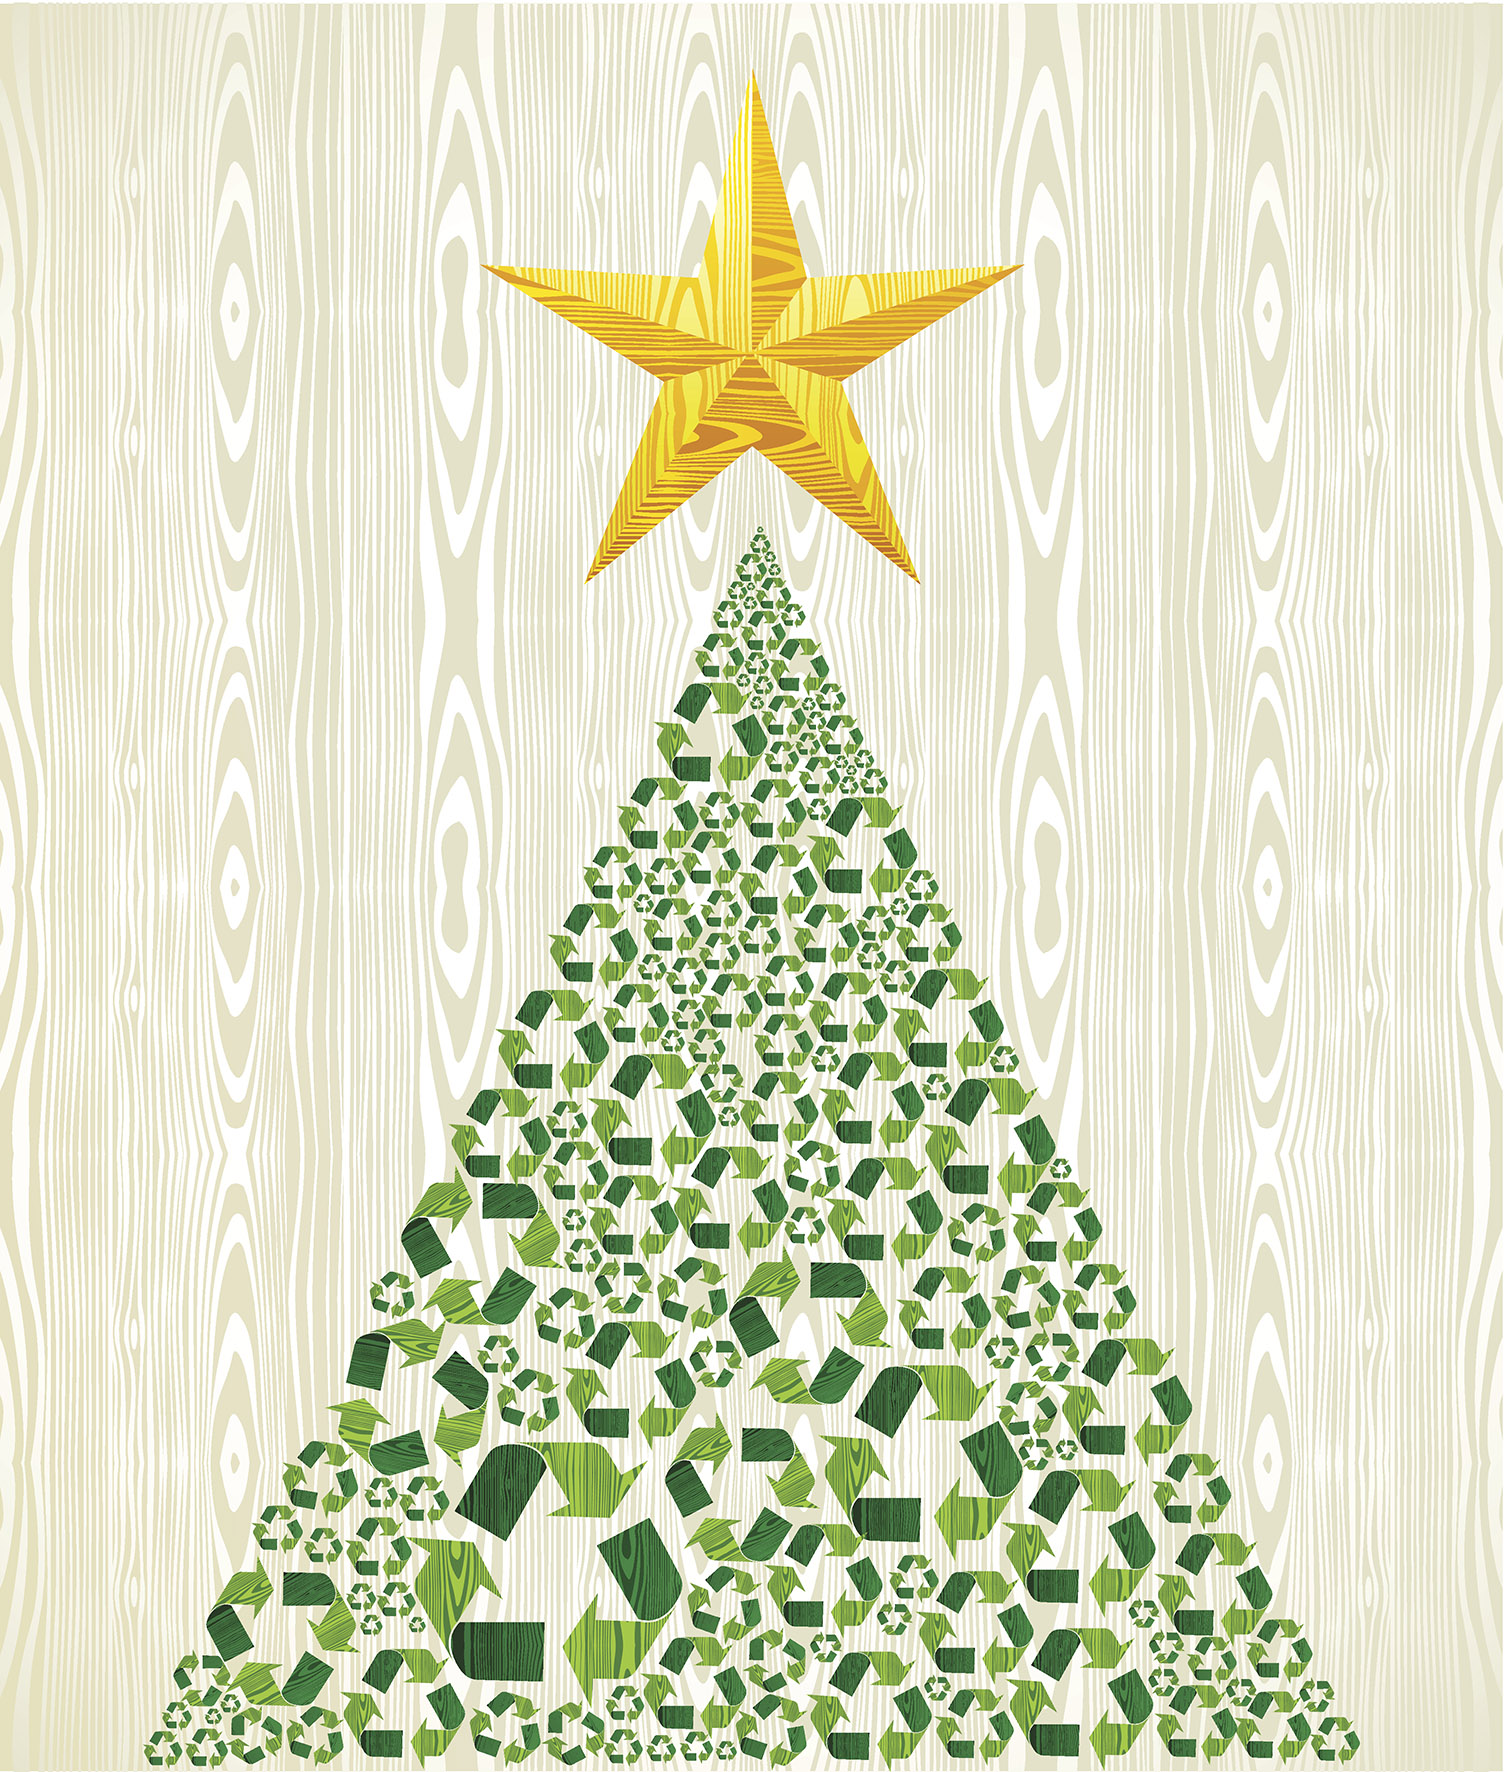 Recycling Christmas tree